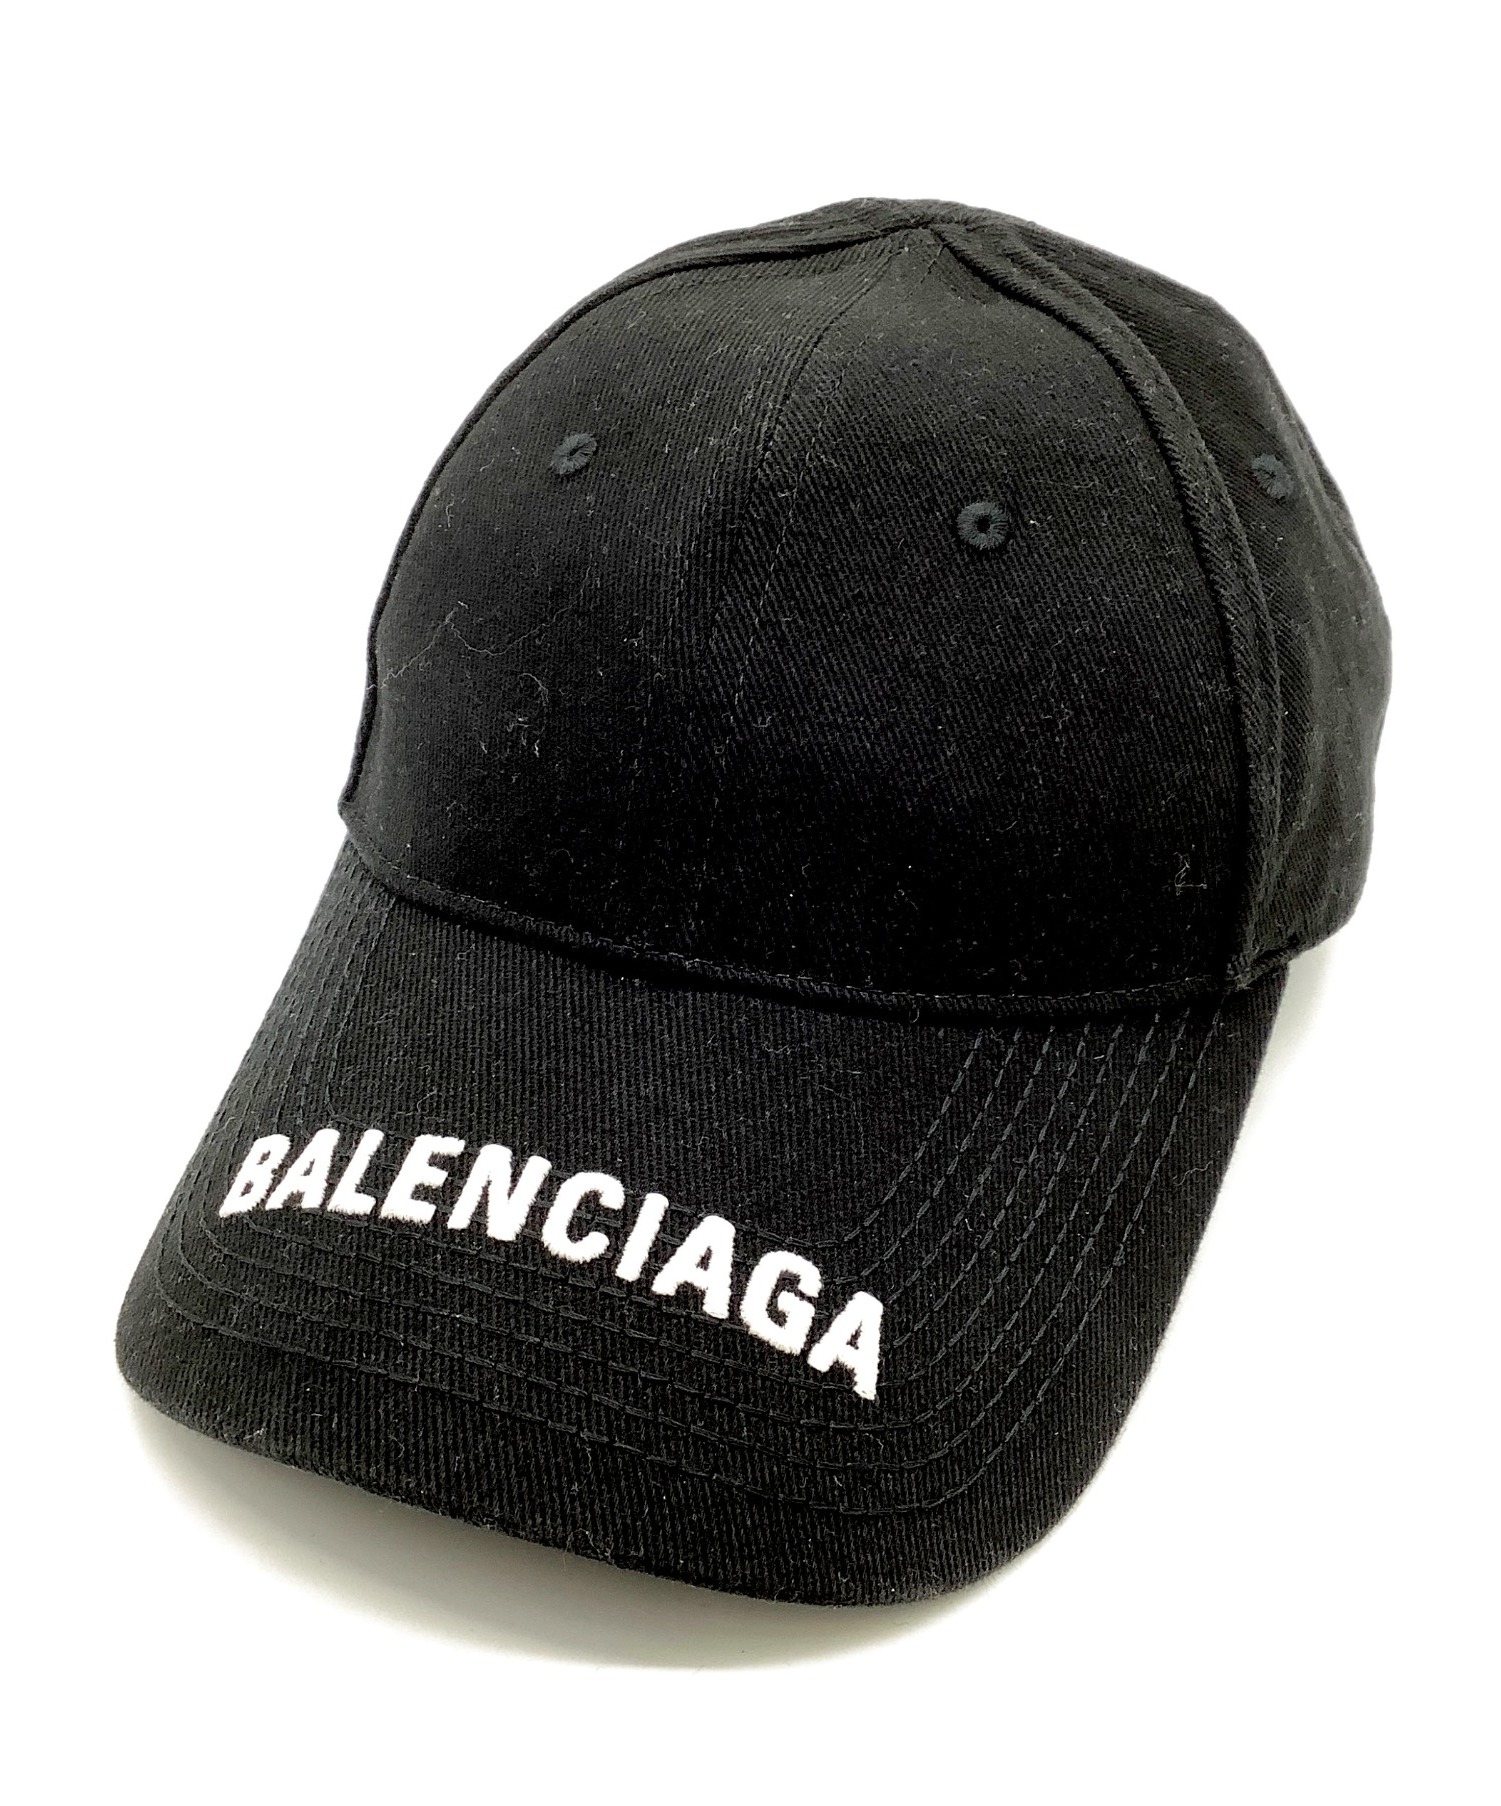 【BALENCIAGA】BALENCIAGA キャップ ブラック - oksip.id